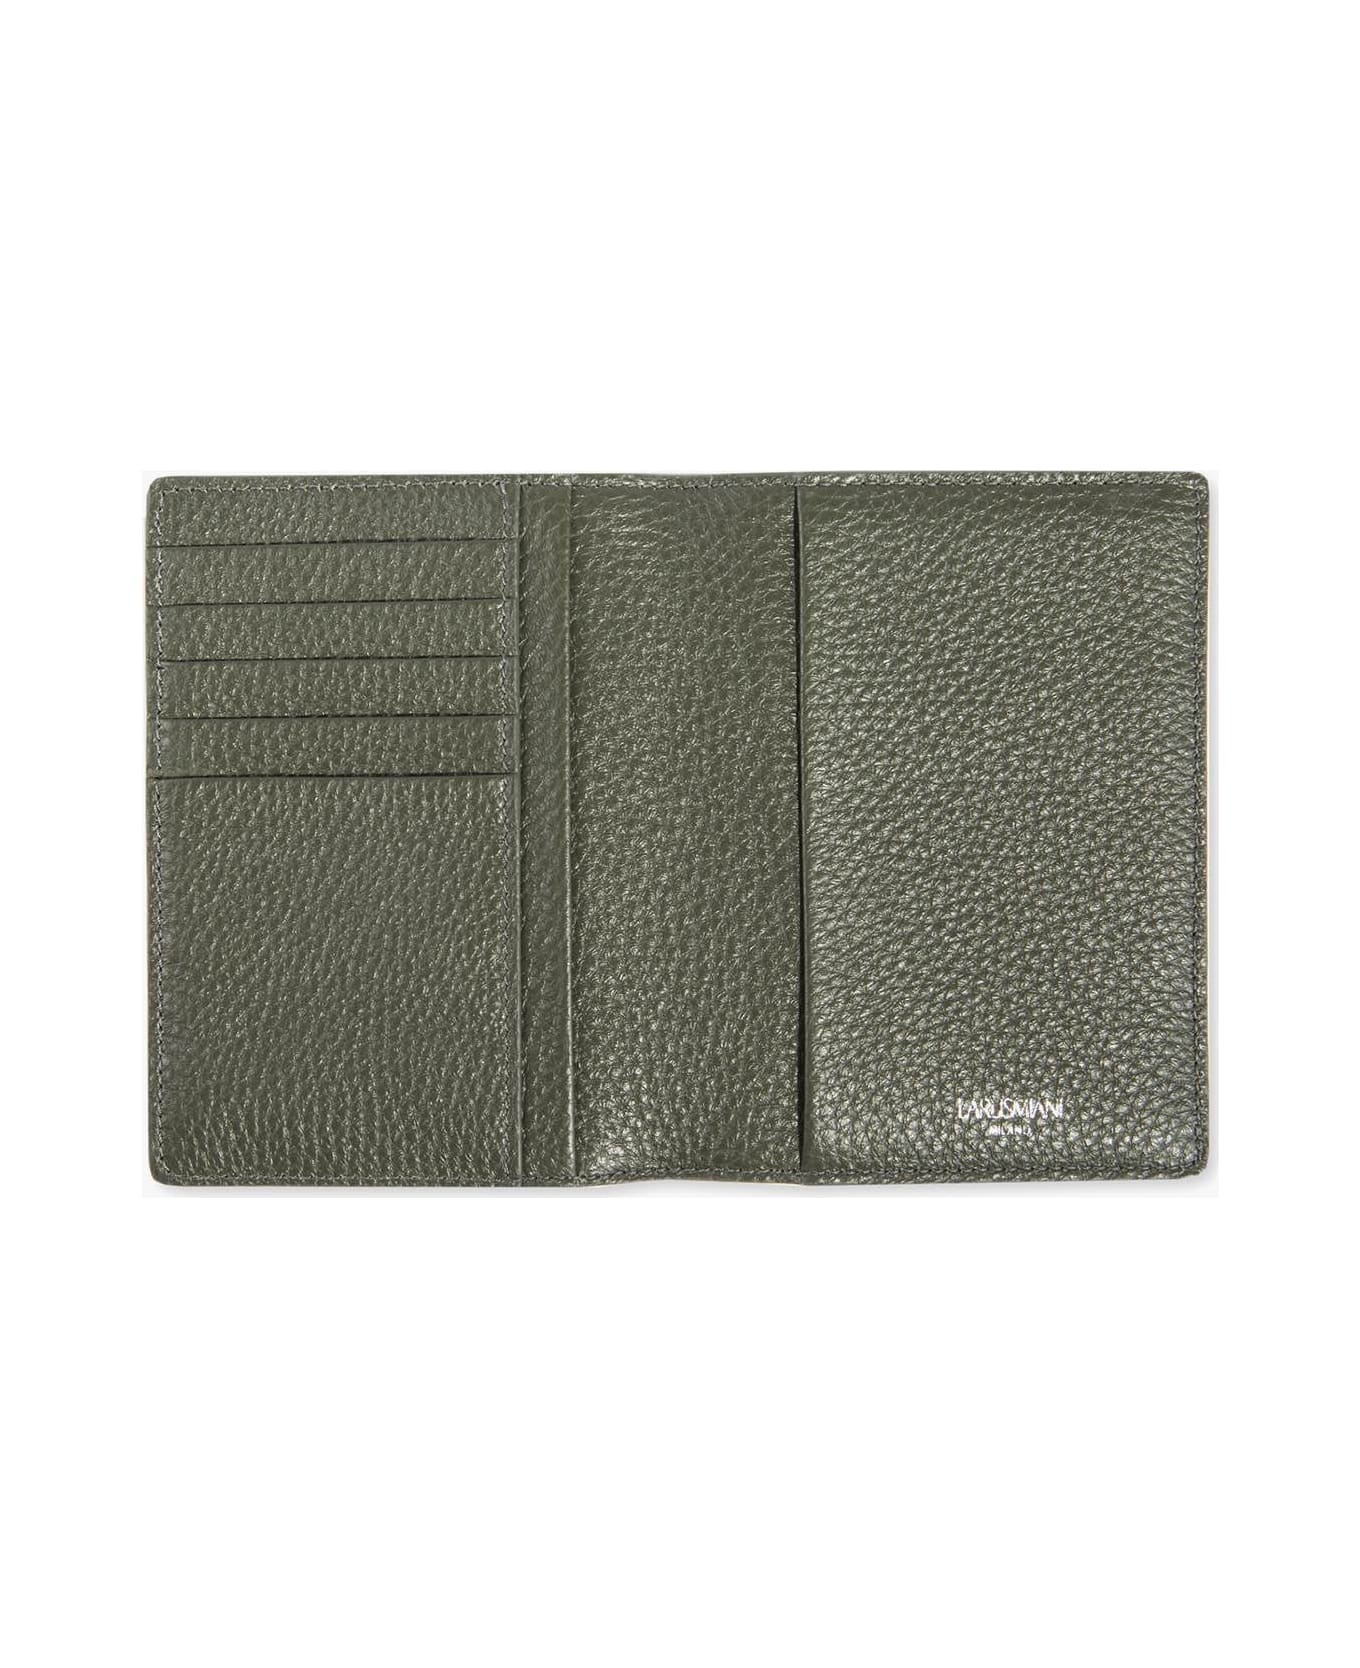 Larusmiani Passport Cover 'fiumicino' Wallet - Olive